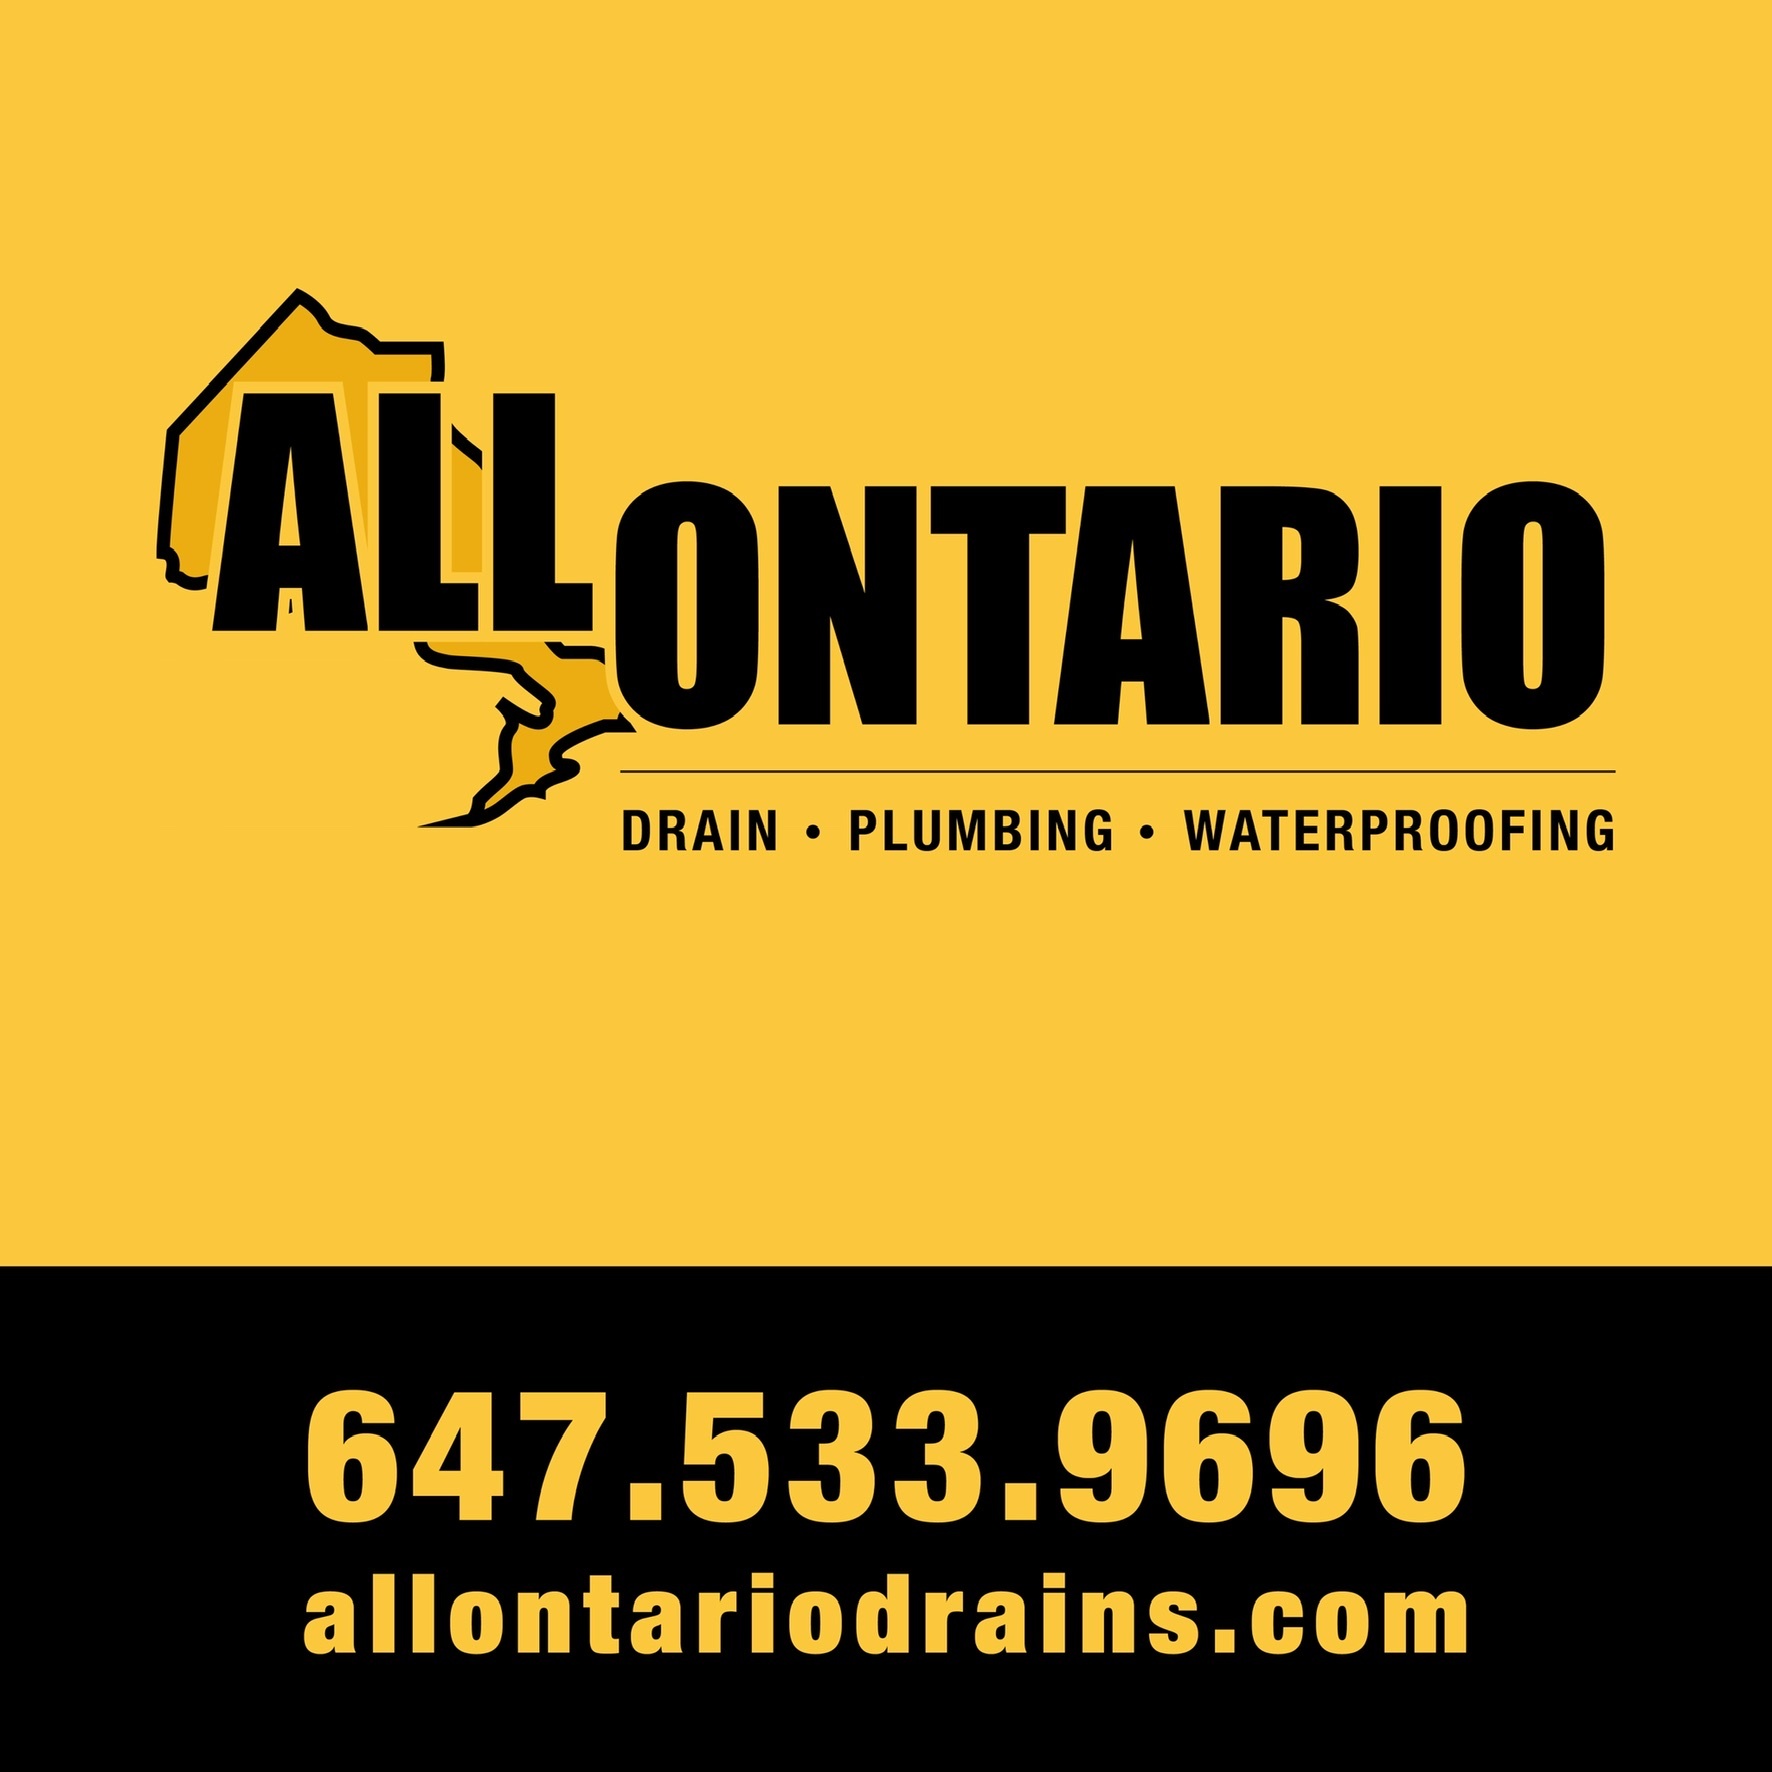 All Ontario Drains's logo